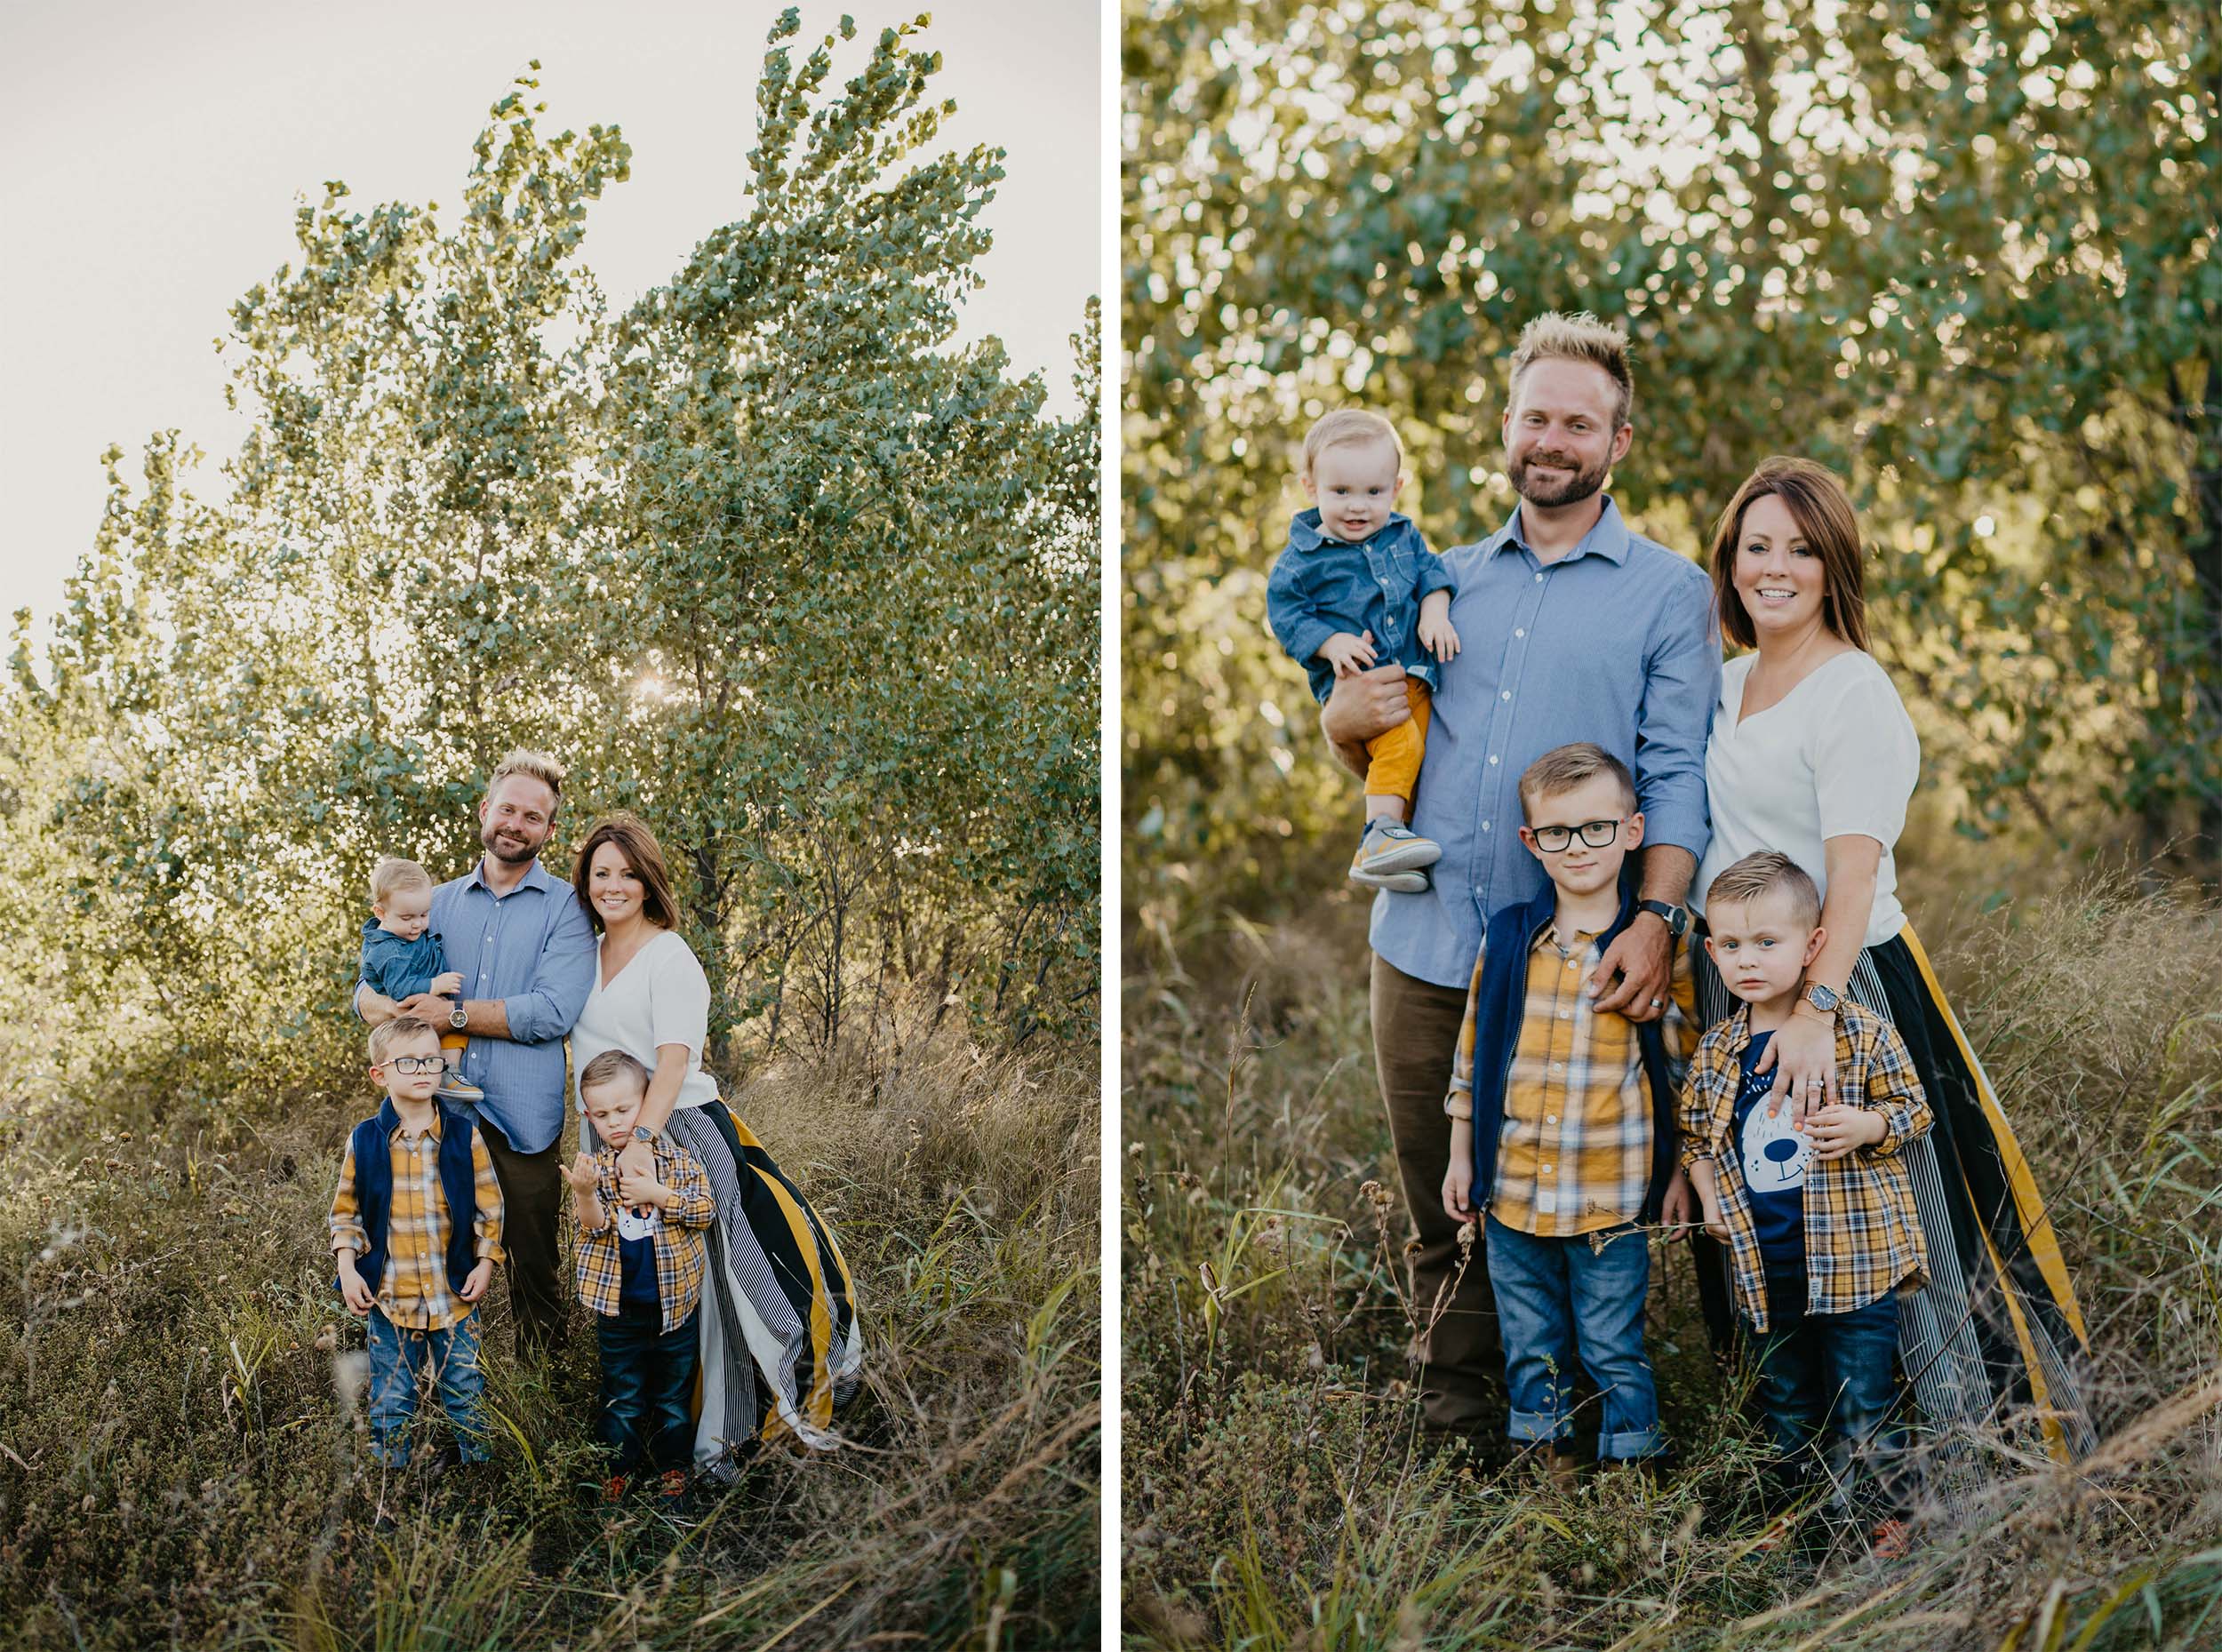 Berning Family Wichita Lifestyle Photographer Andrea Corwin Photography 11